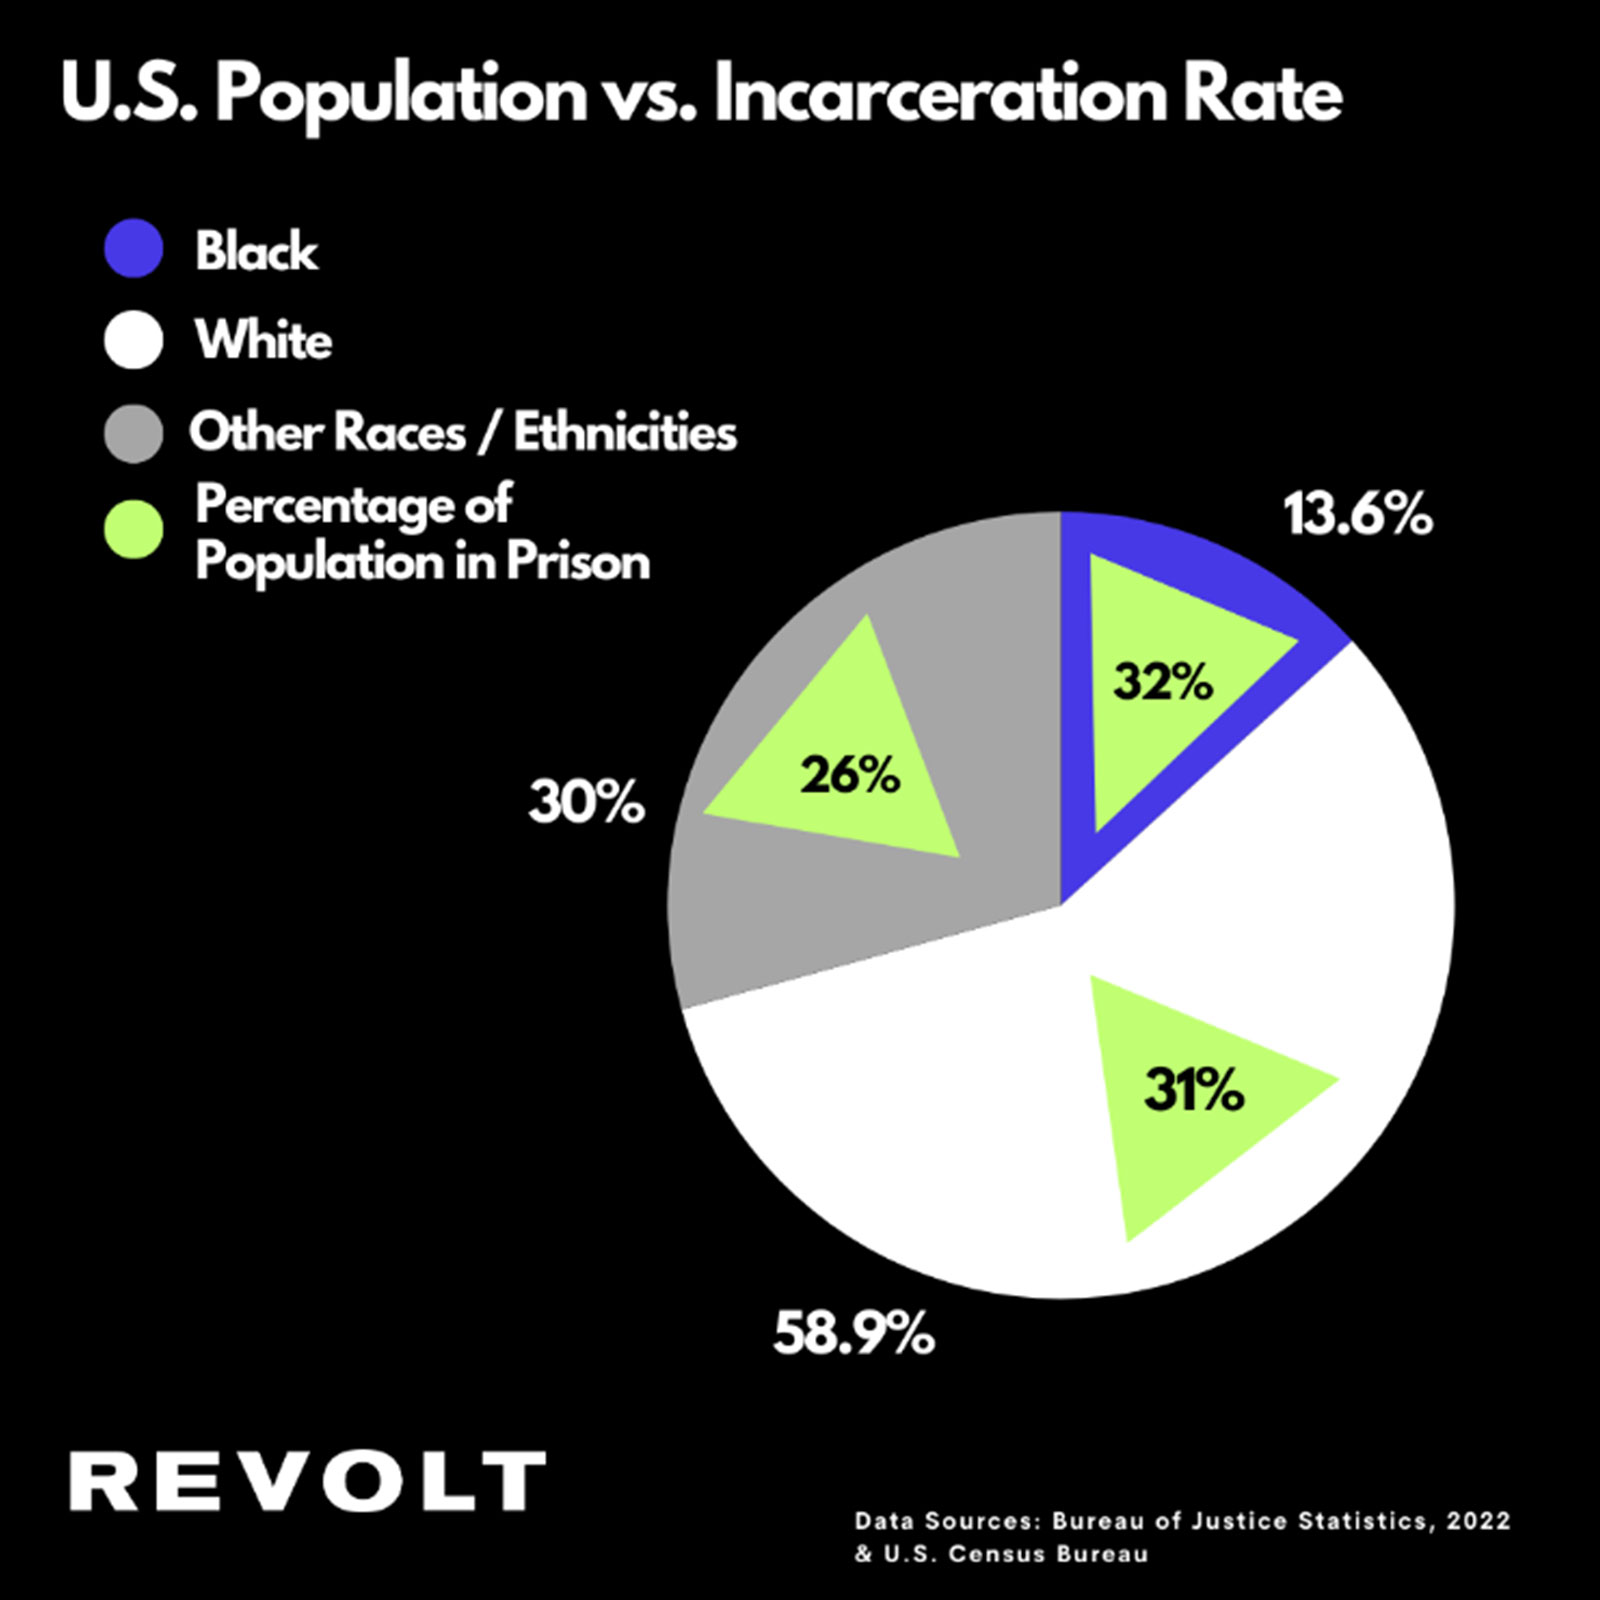 Graphic by REVOLT. Data Sources: Bureau of Justice Statistics, 2022 & U.S. Census Bureau